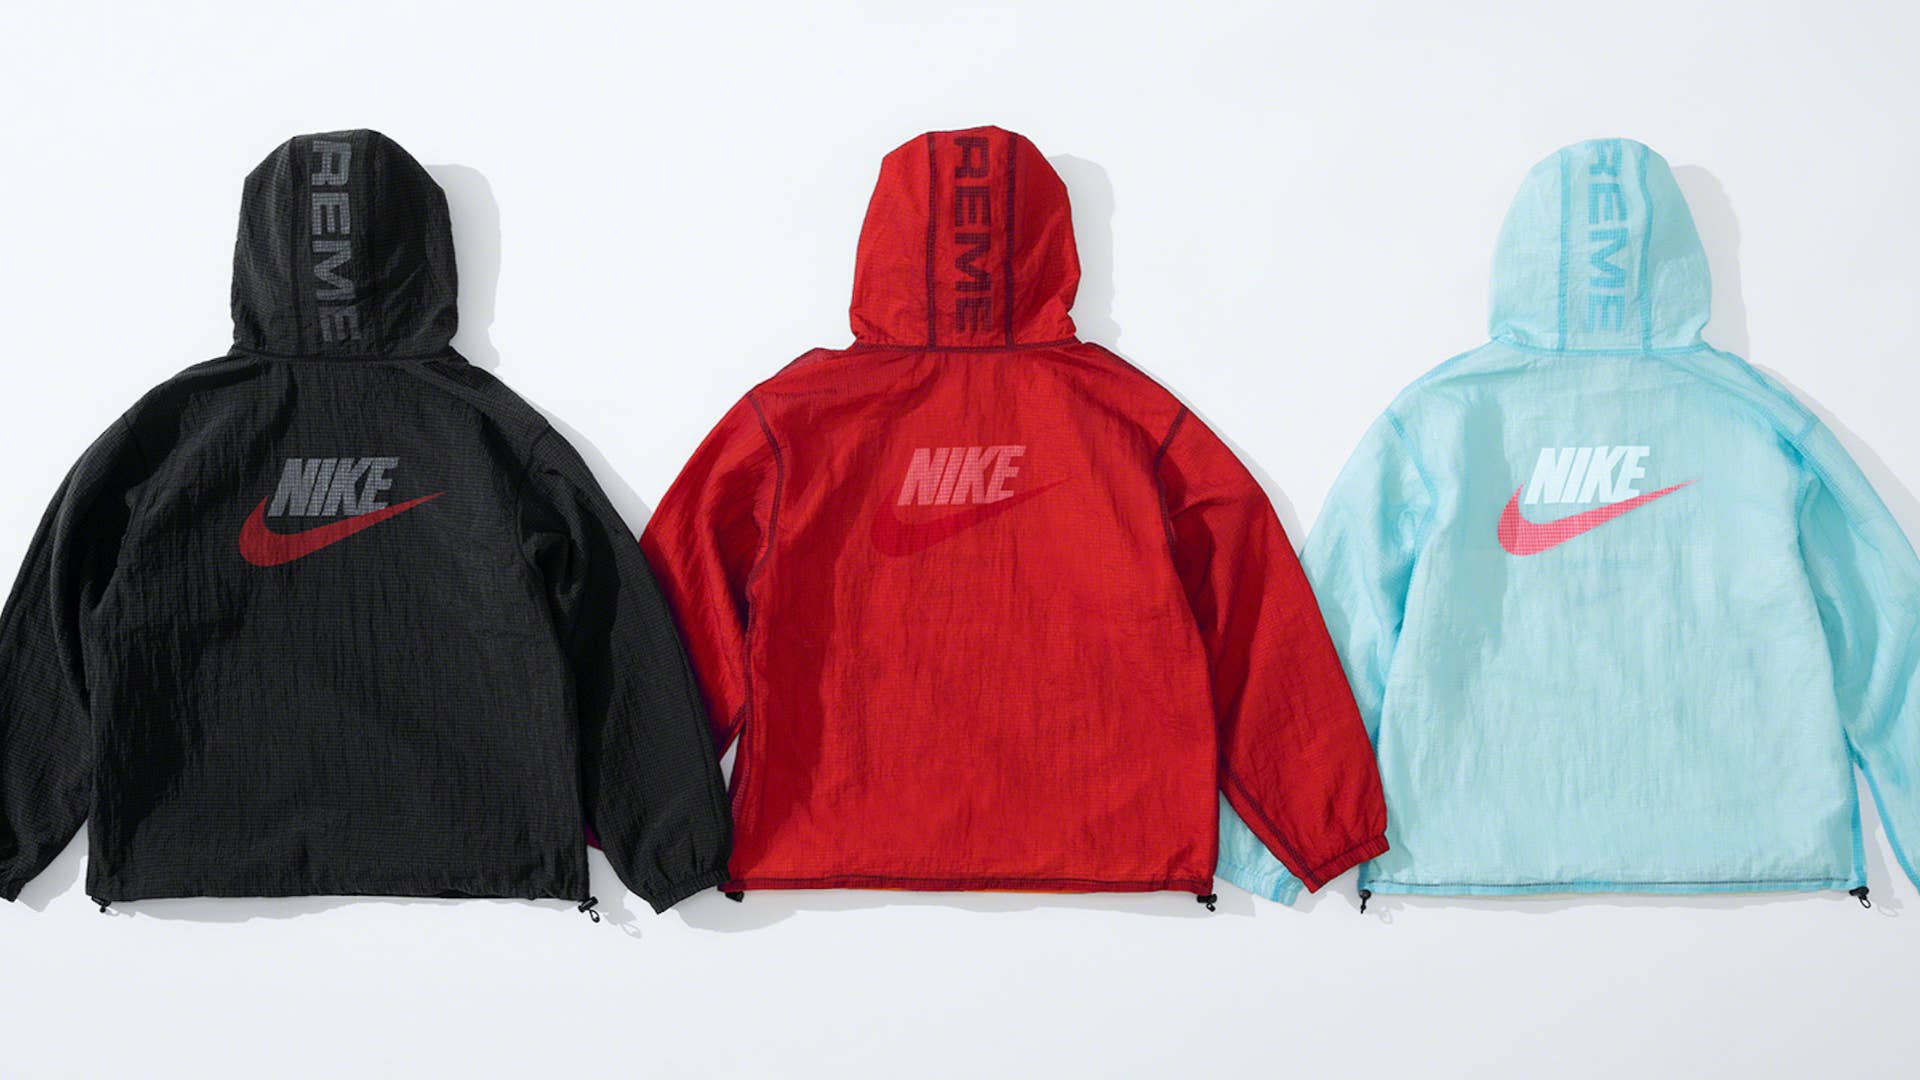 The Latest Nike x Supreme Collab Rekindles Our Retro Sportswear